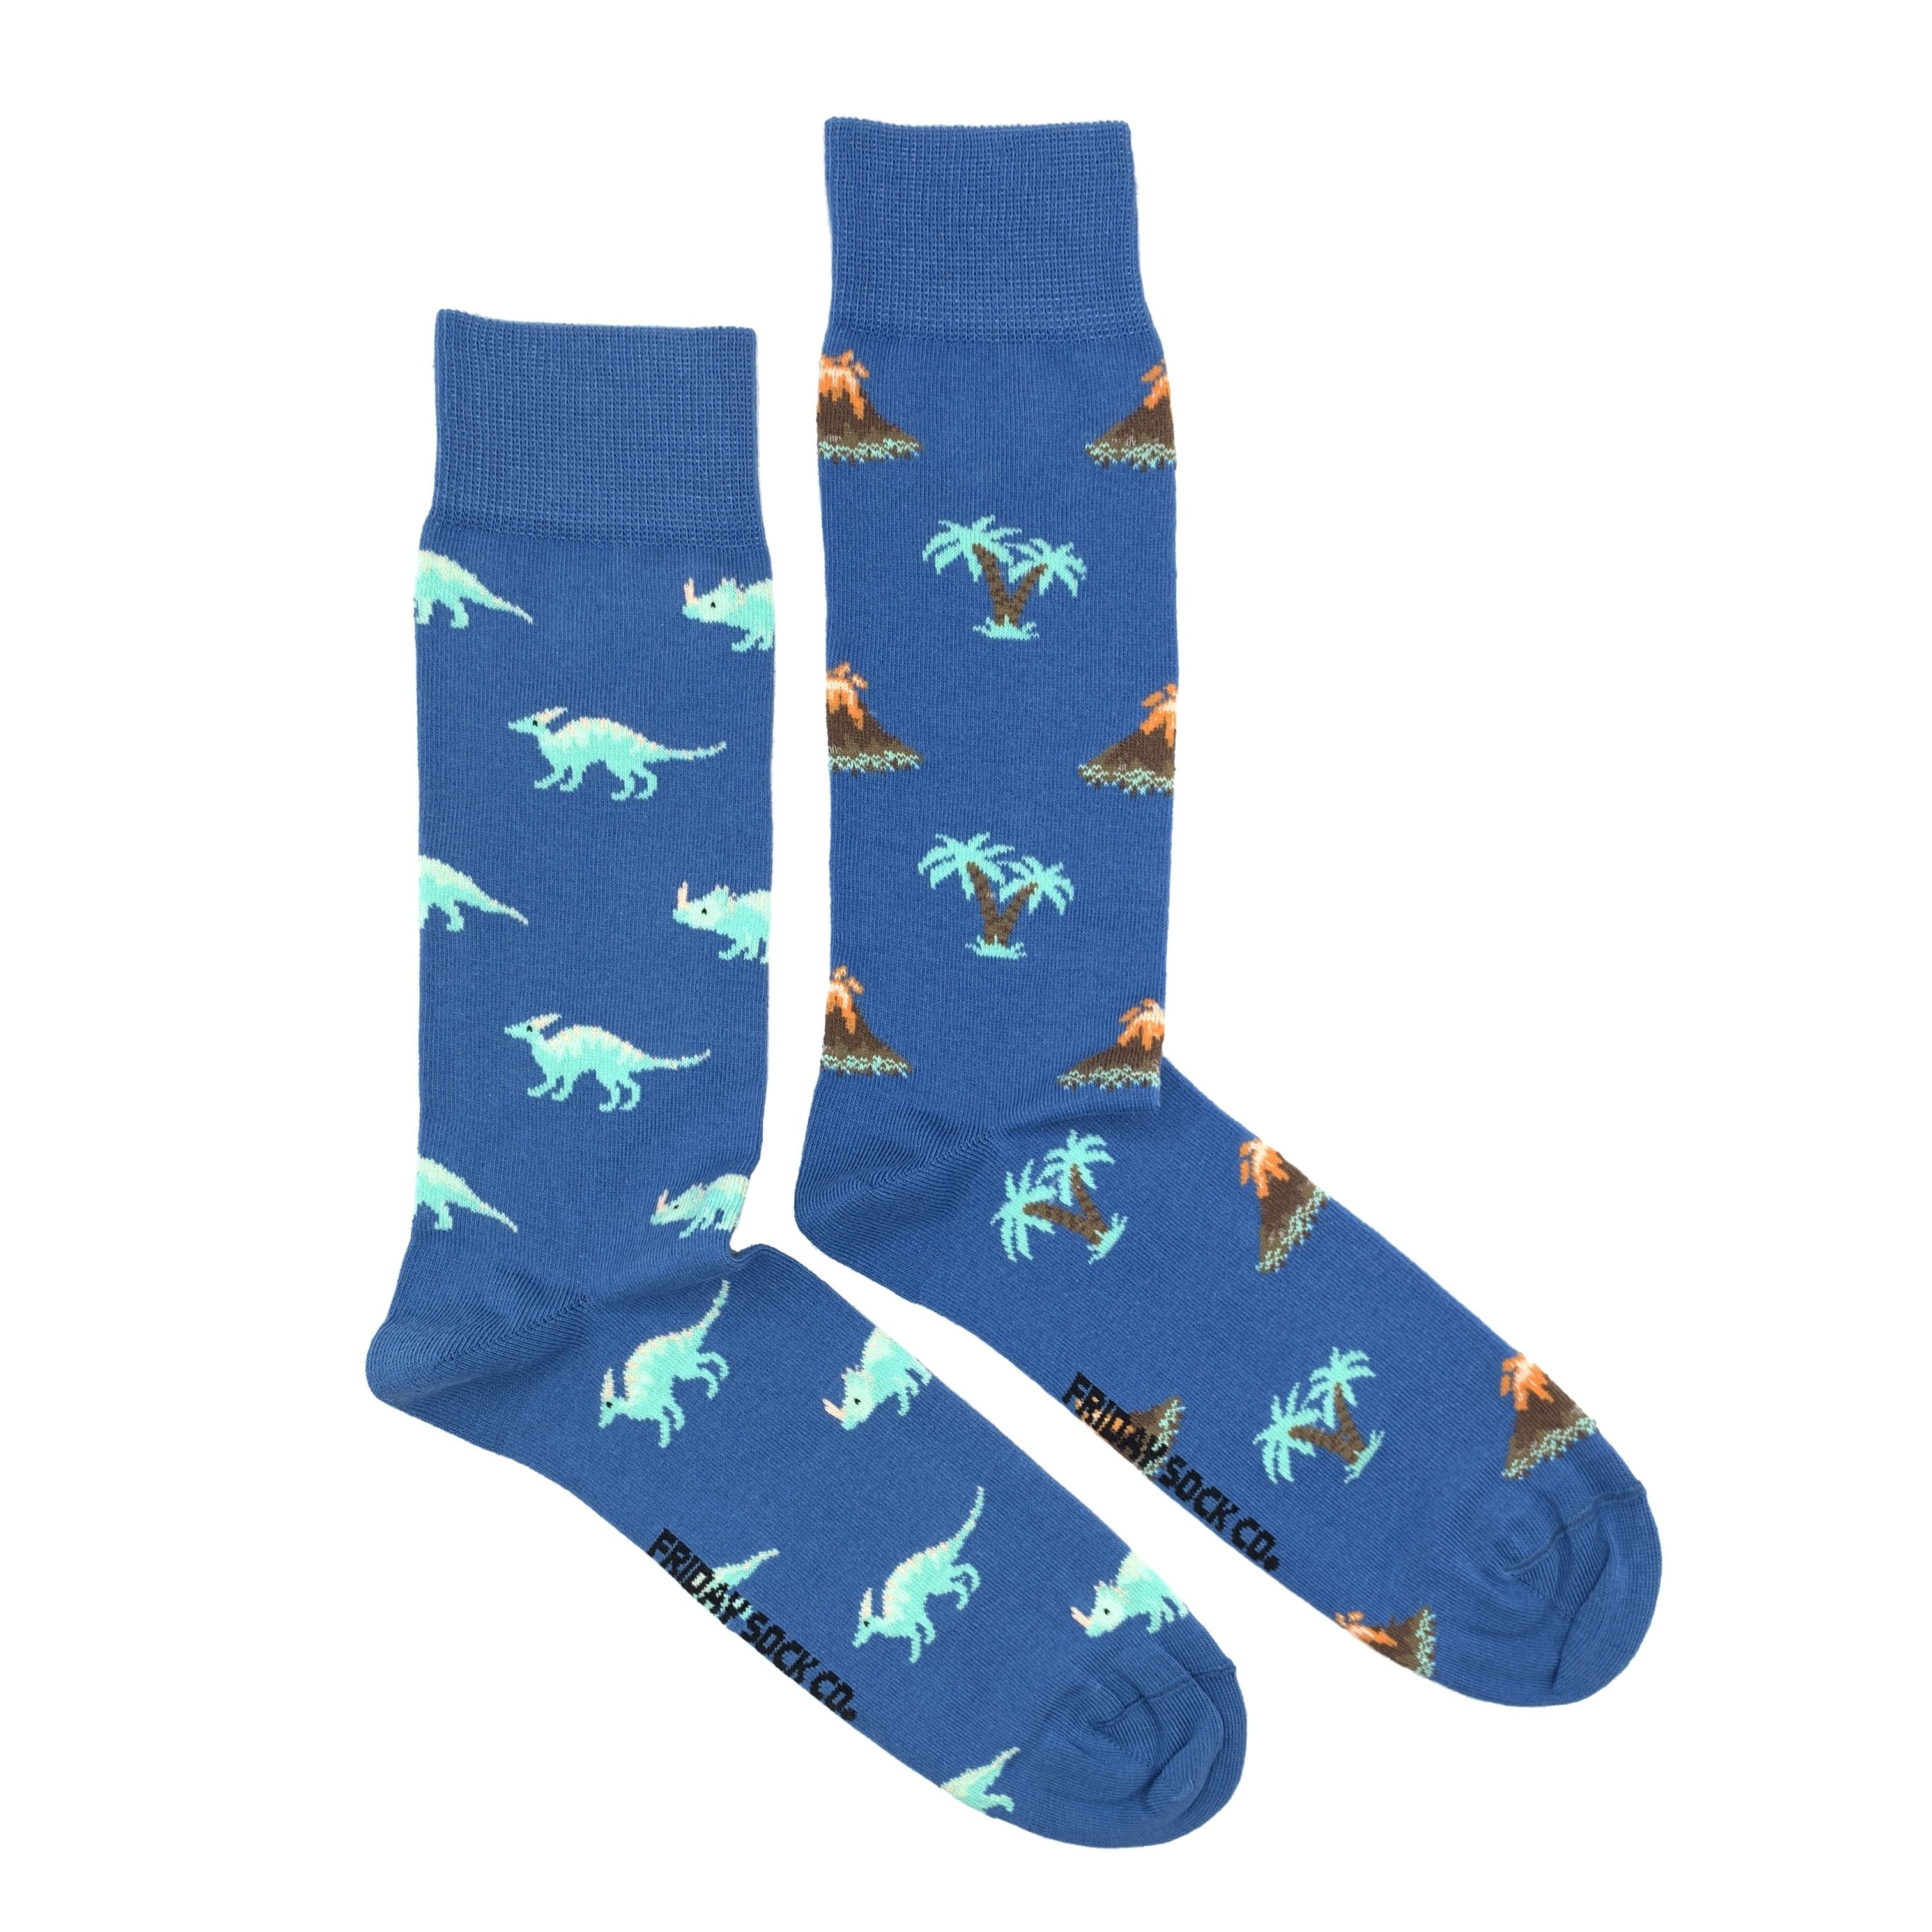 Men's Midcalf Socks - Dinosaur Blue